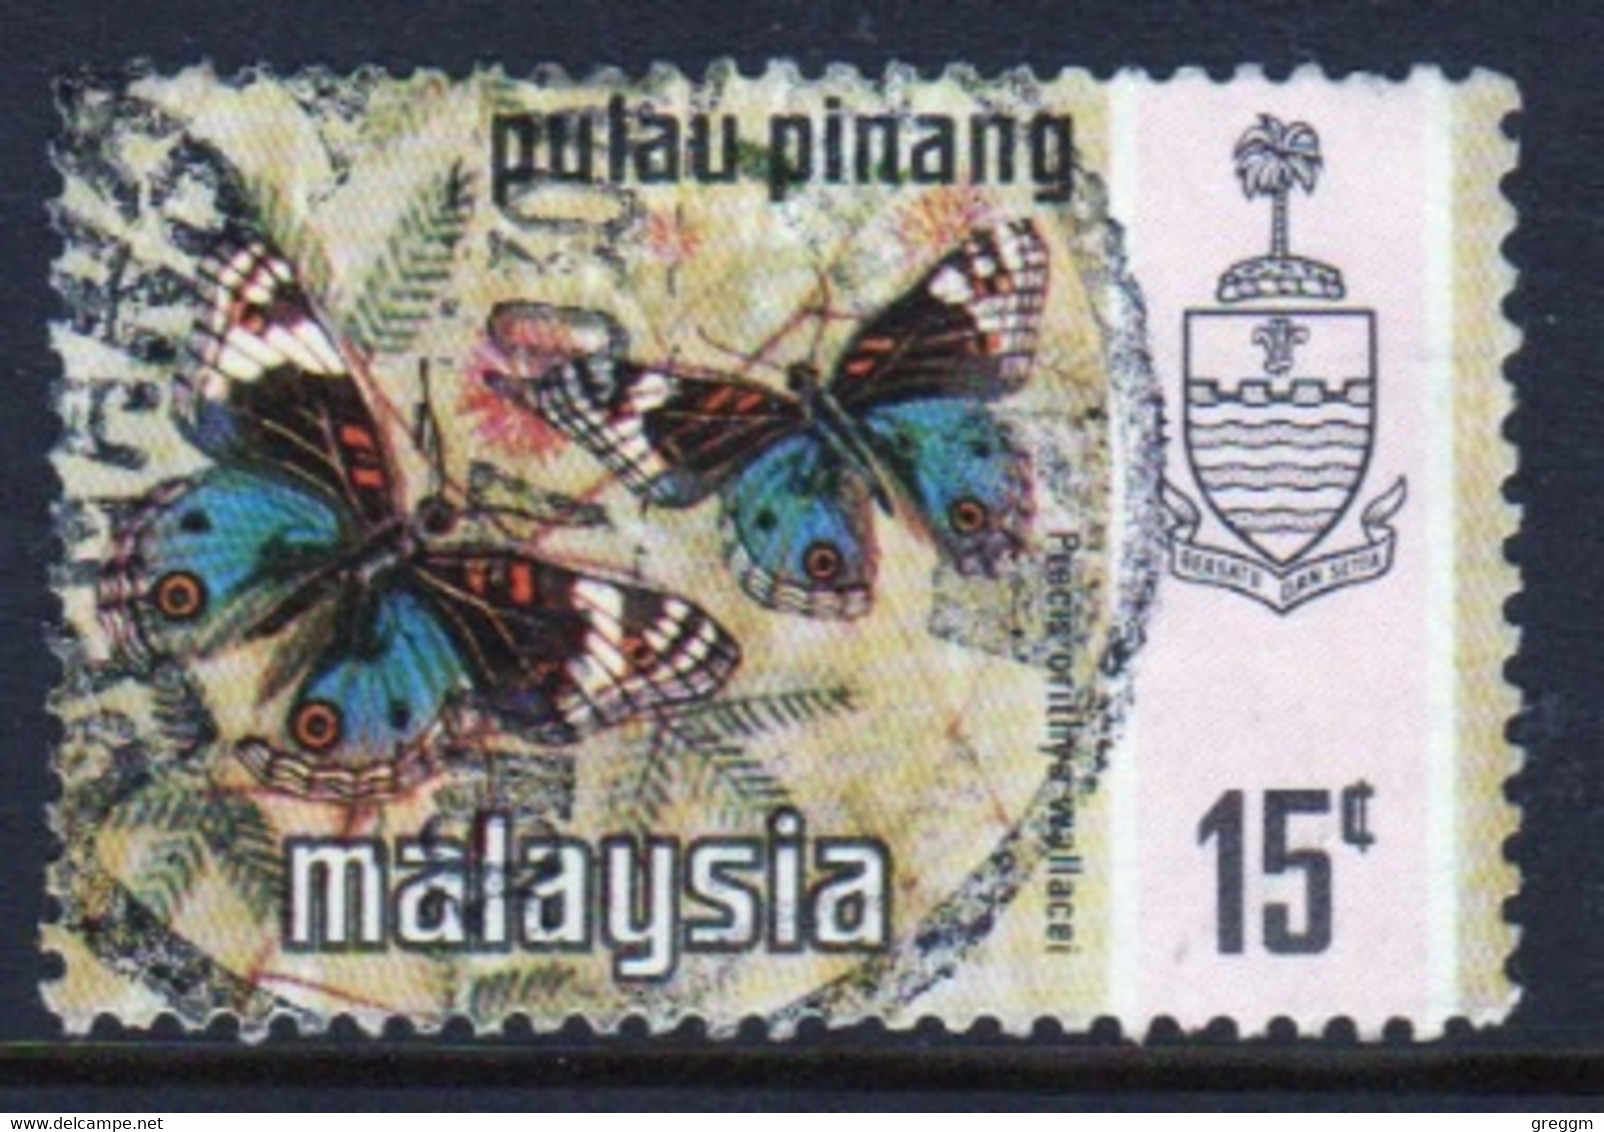 Malaya Penang 1971 Queen Elizabeth II Single 15c Stamp From The Butterflies Set In Fine Used - Penang